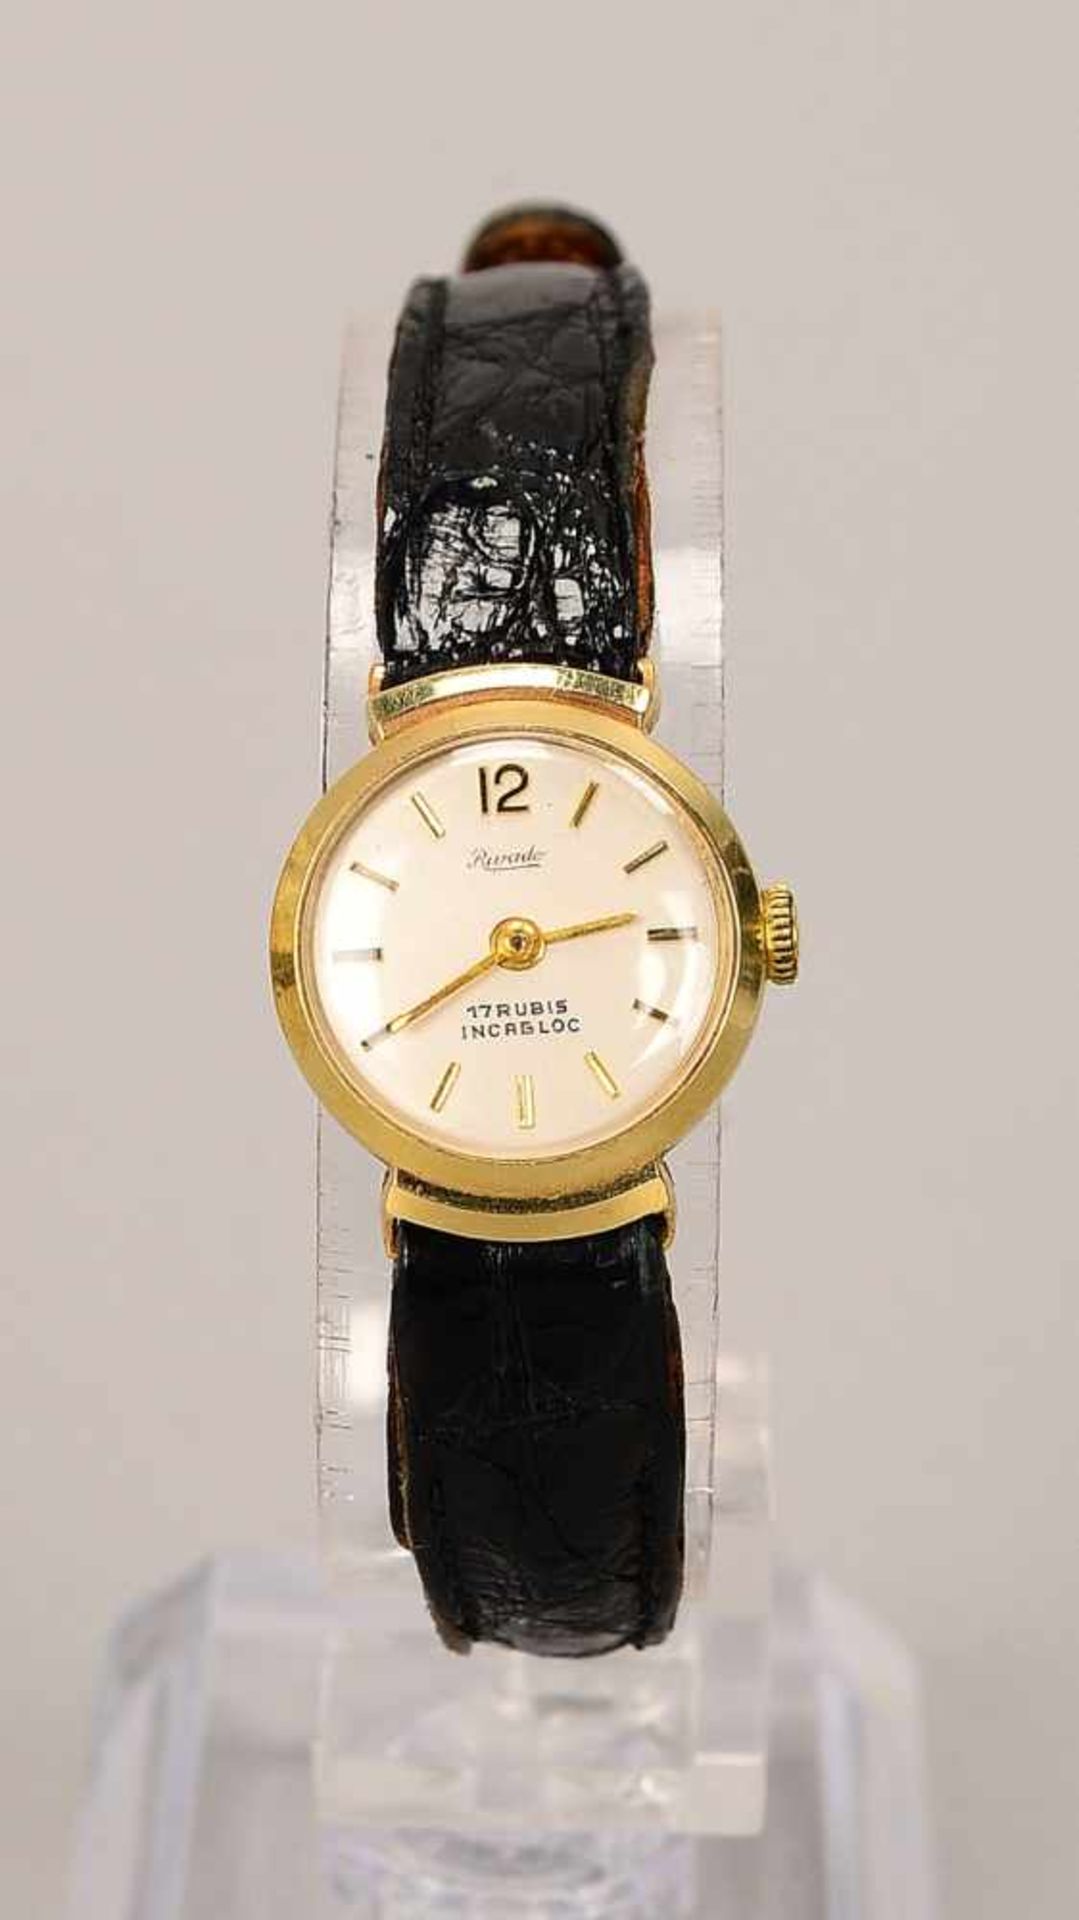 Damen-Armbanduhr, Rivado, 585 GG-Gehäuse, Uhr läuft an, mit Lederarmband in Kroko-Prägung;